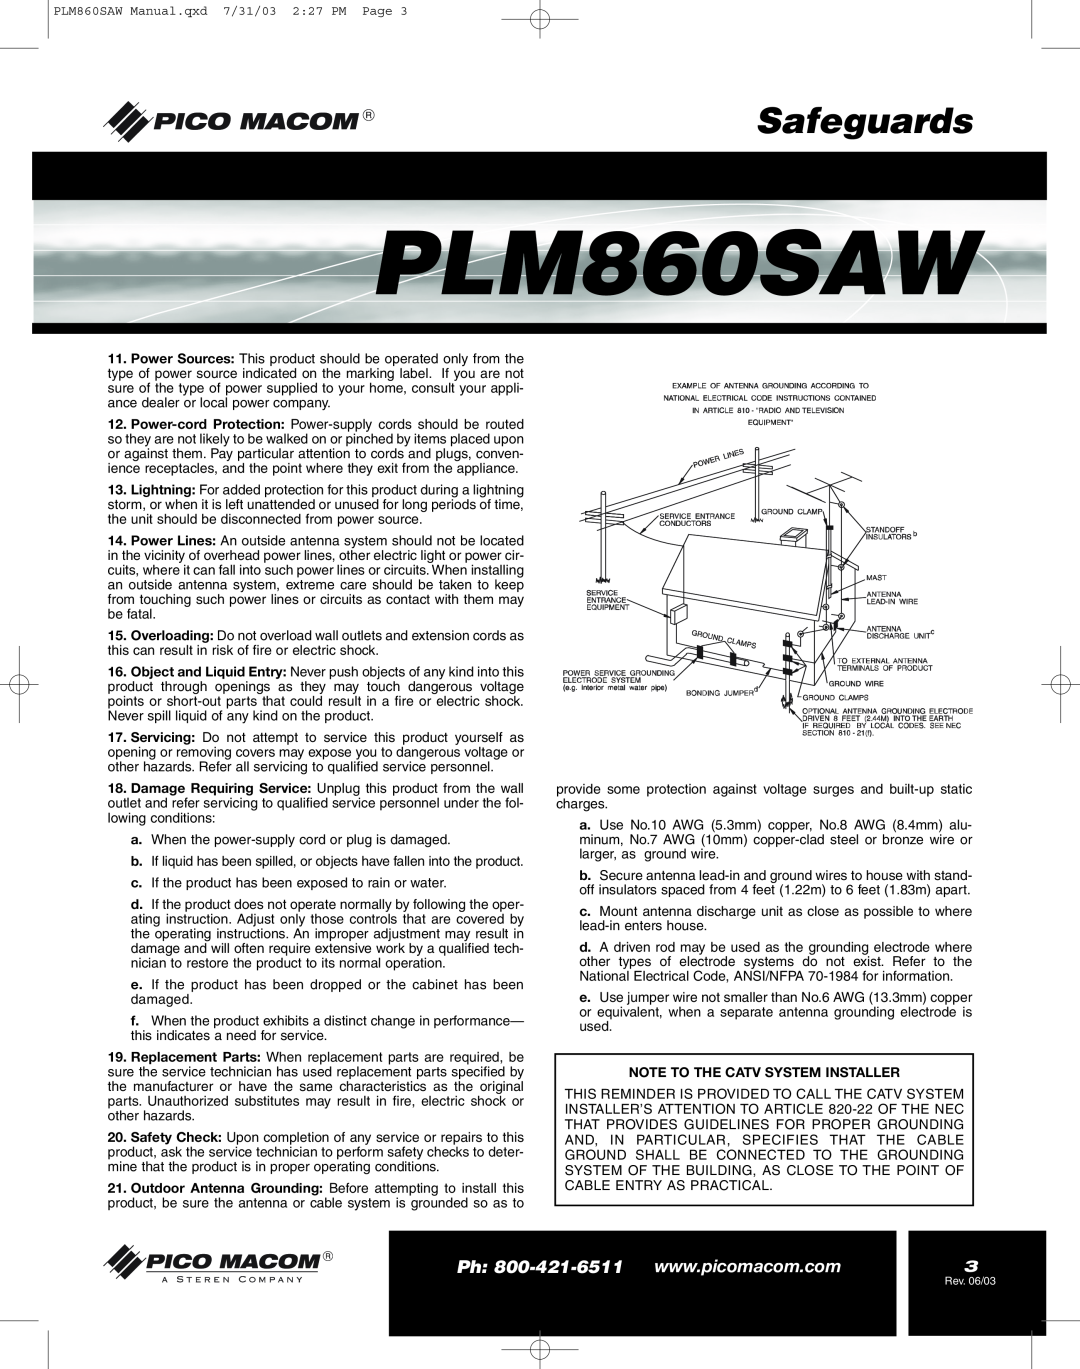 Pico Macom PFAM860SAW operation manual PLM860SAW, Safeguards, Note To The Catv System Installer 